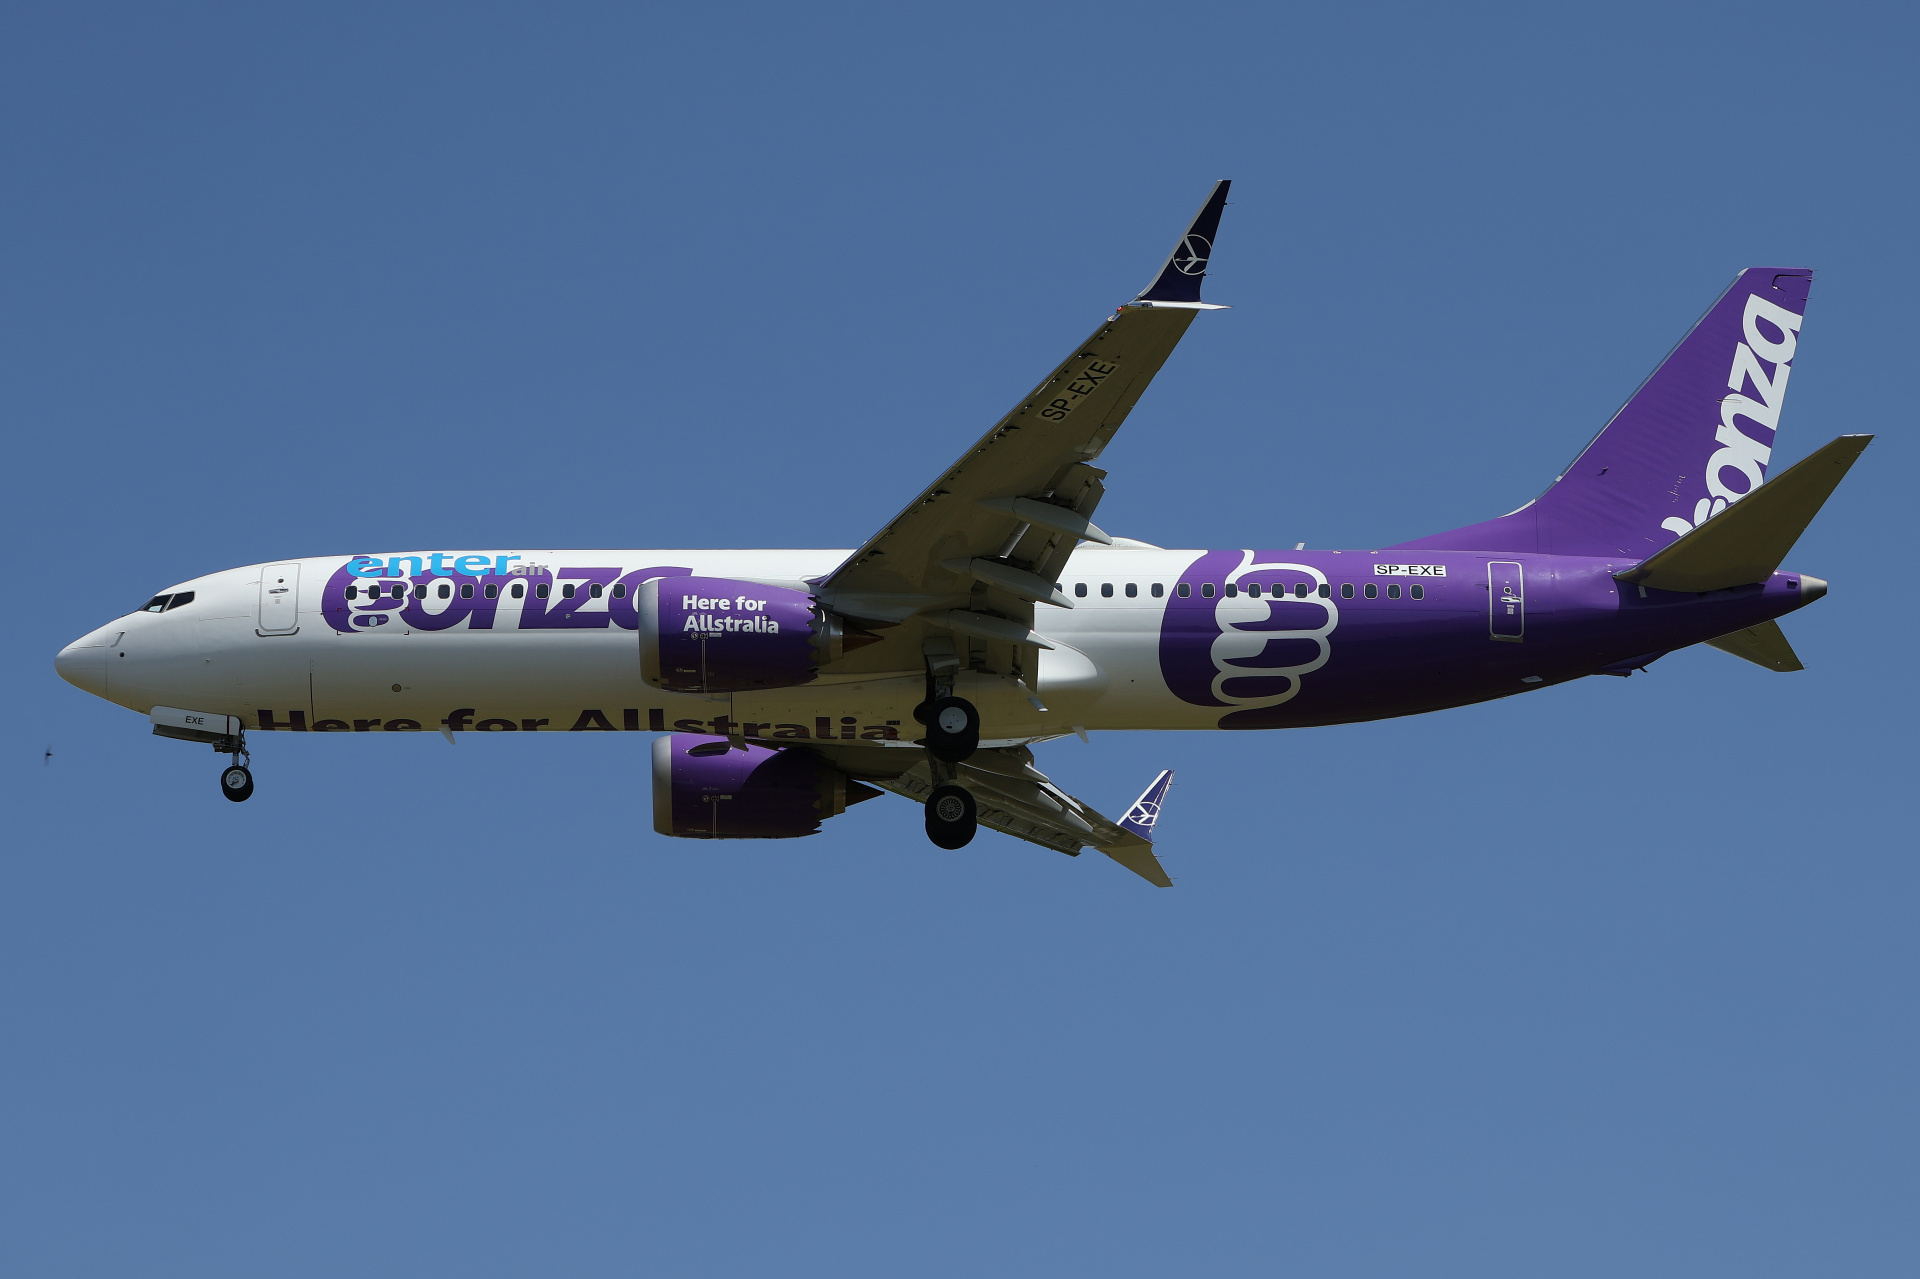 SP-EXE (Bonza) (Aircraft » EPWA Spotting » Boeing 737-8 MAX » Enter Air)